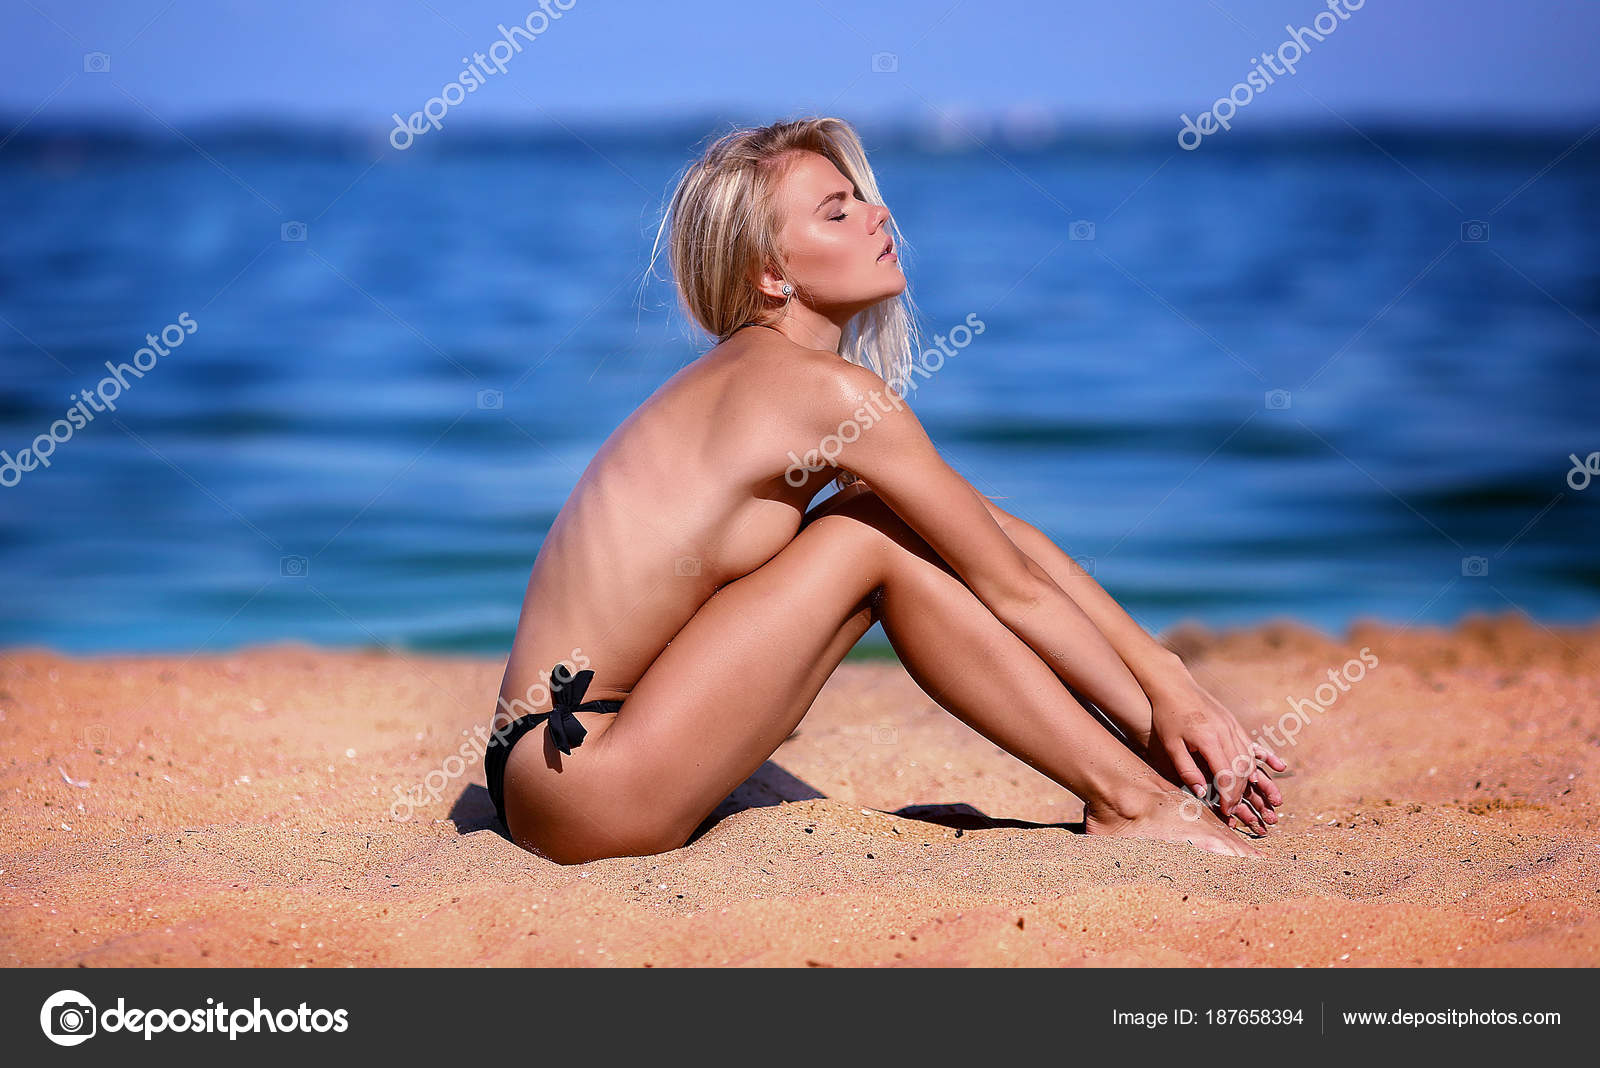 Flawless topless blond butt on the beach